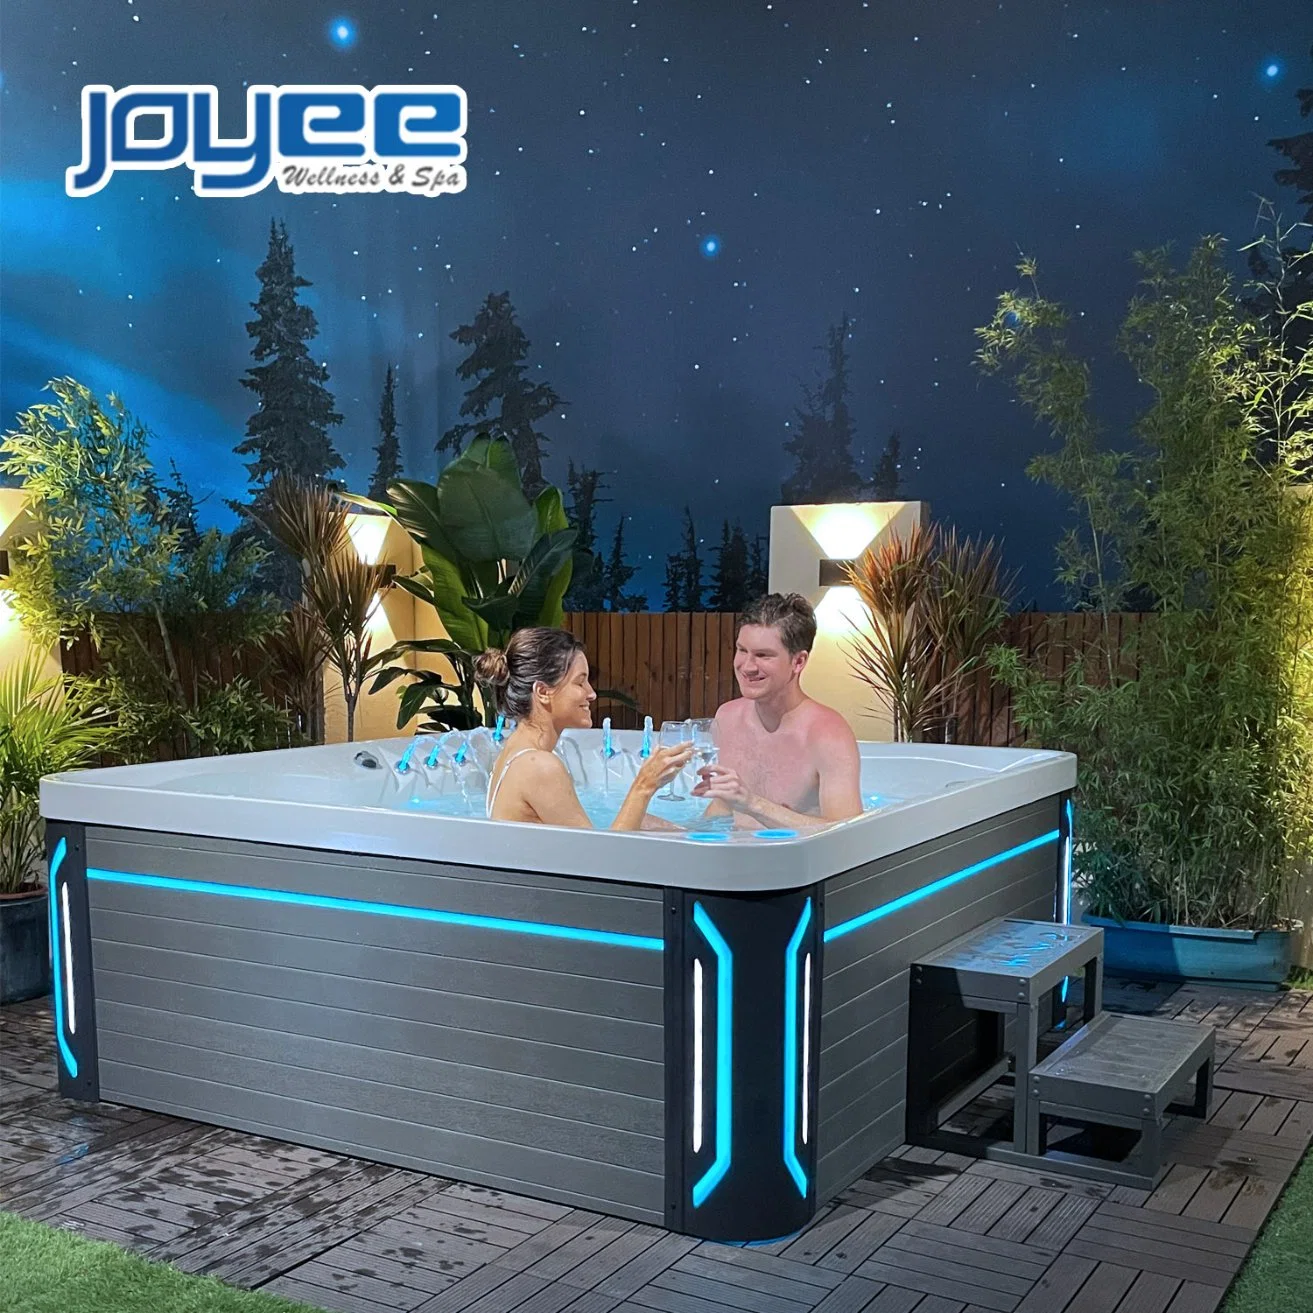 Joyee Factory Cheap Balboa SPA Pools Music Jet Whirlpool Bath Outdoor Hot Tubs